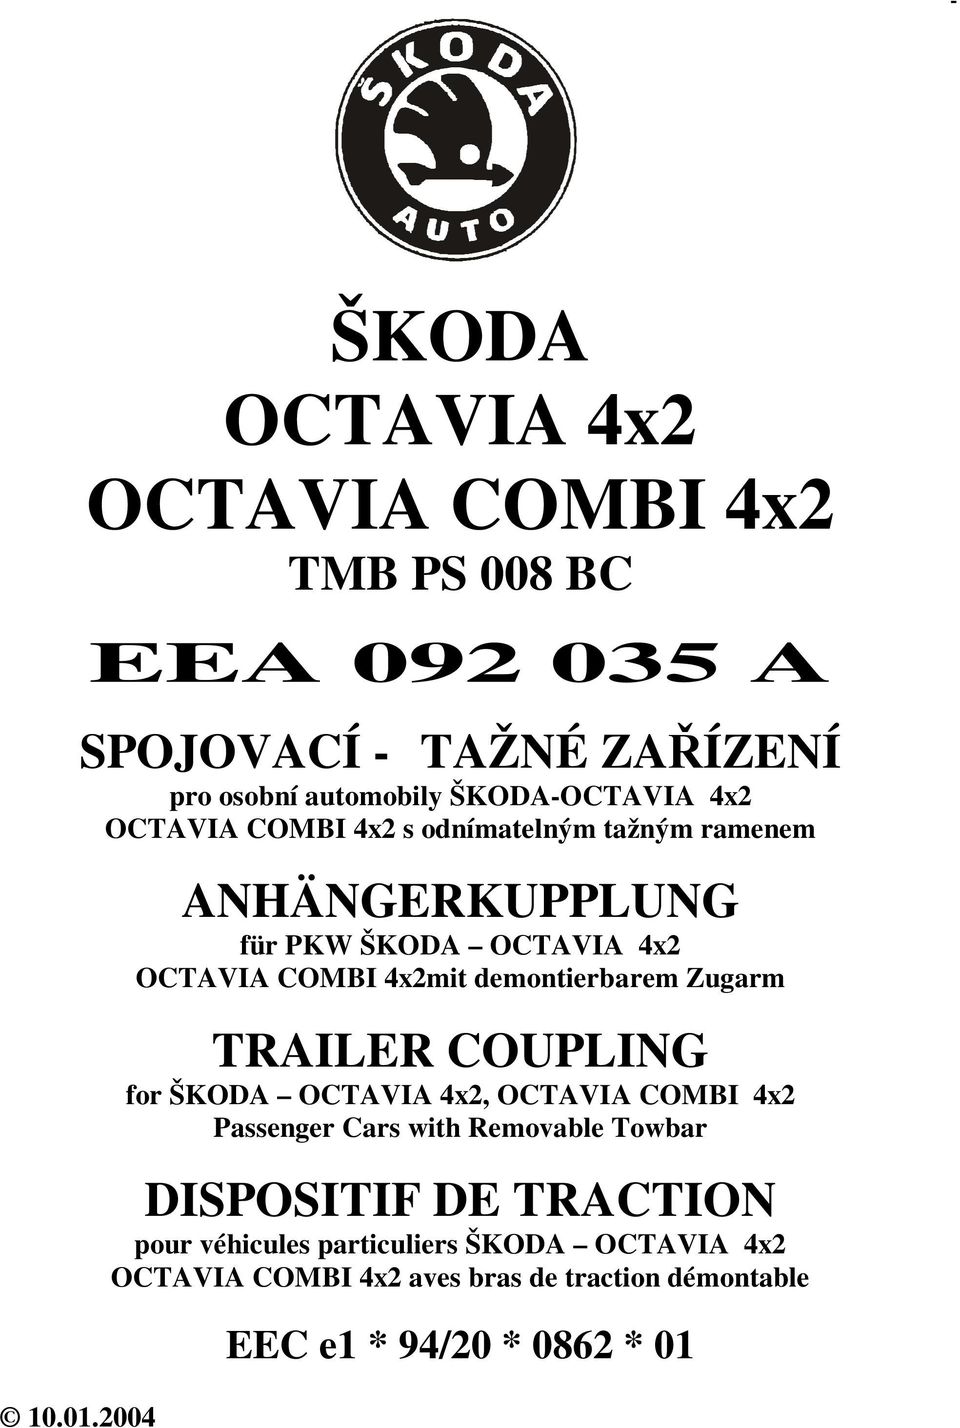 ŠKODA-OCTAVIA 4x2 OCTAVIA COMBI 4x2 s odnímatelným tažným ramenem ANHÄNGERKUPPLUNG für PKW ŠKODA OCTAVIA 4x2 OCTAVIA COMBI 4x2mit